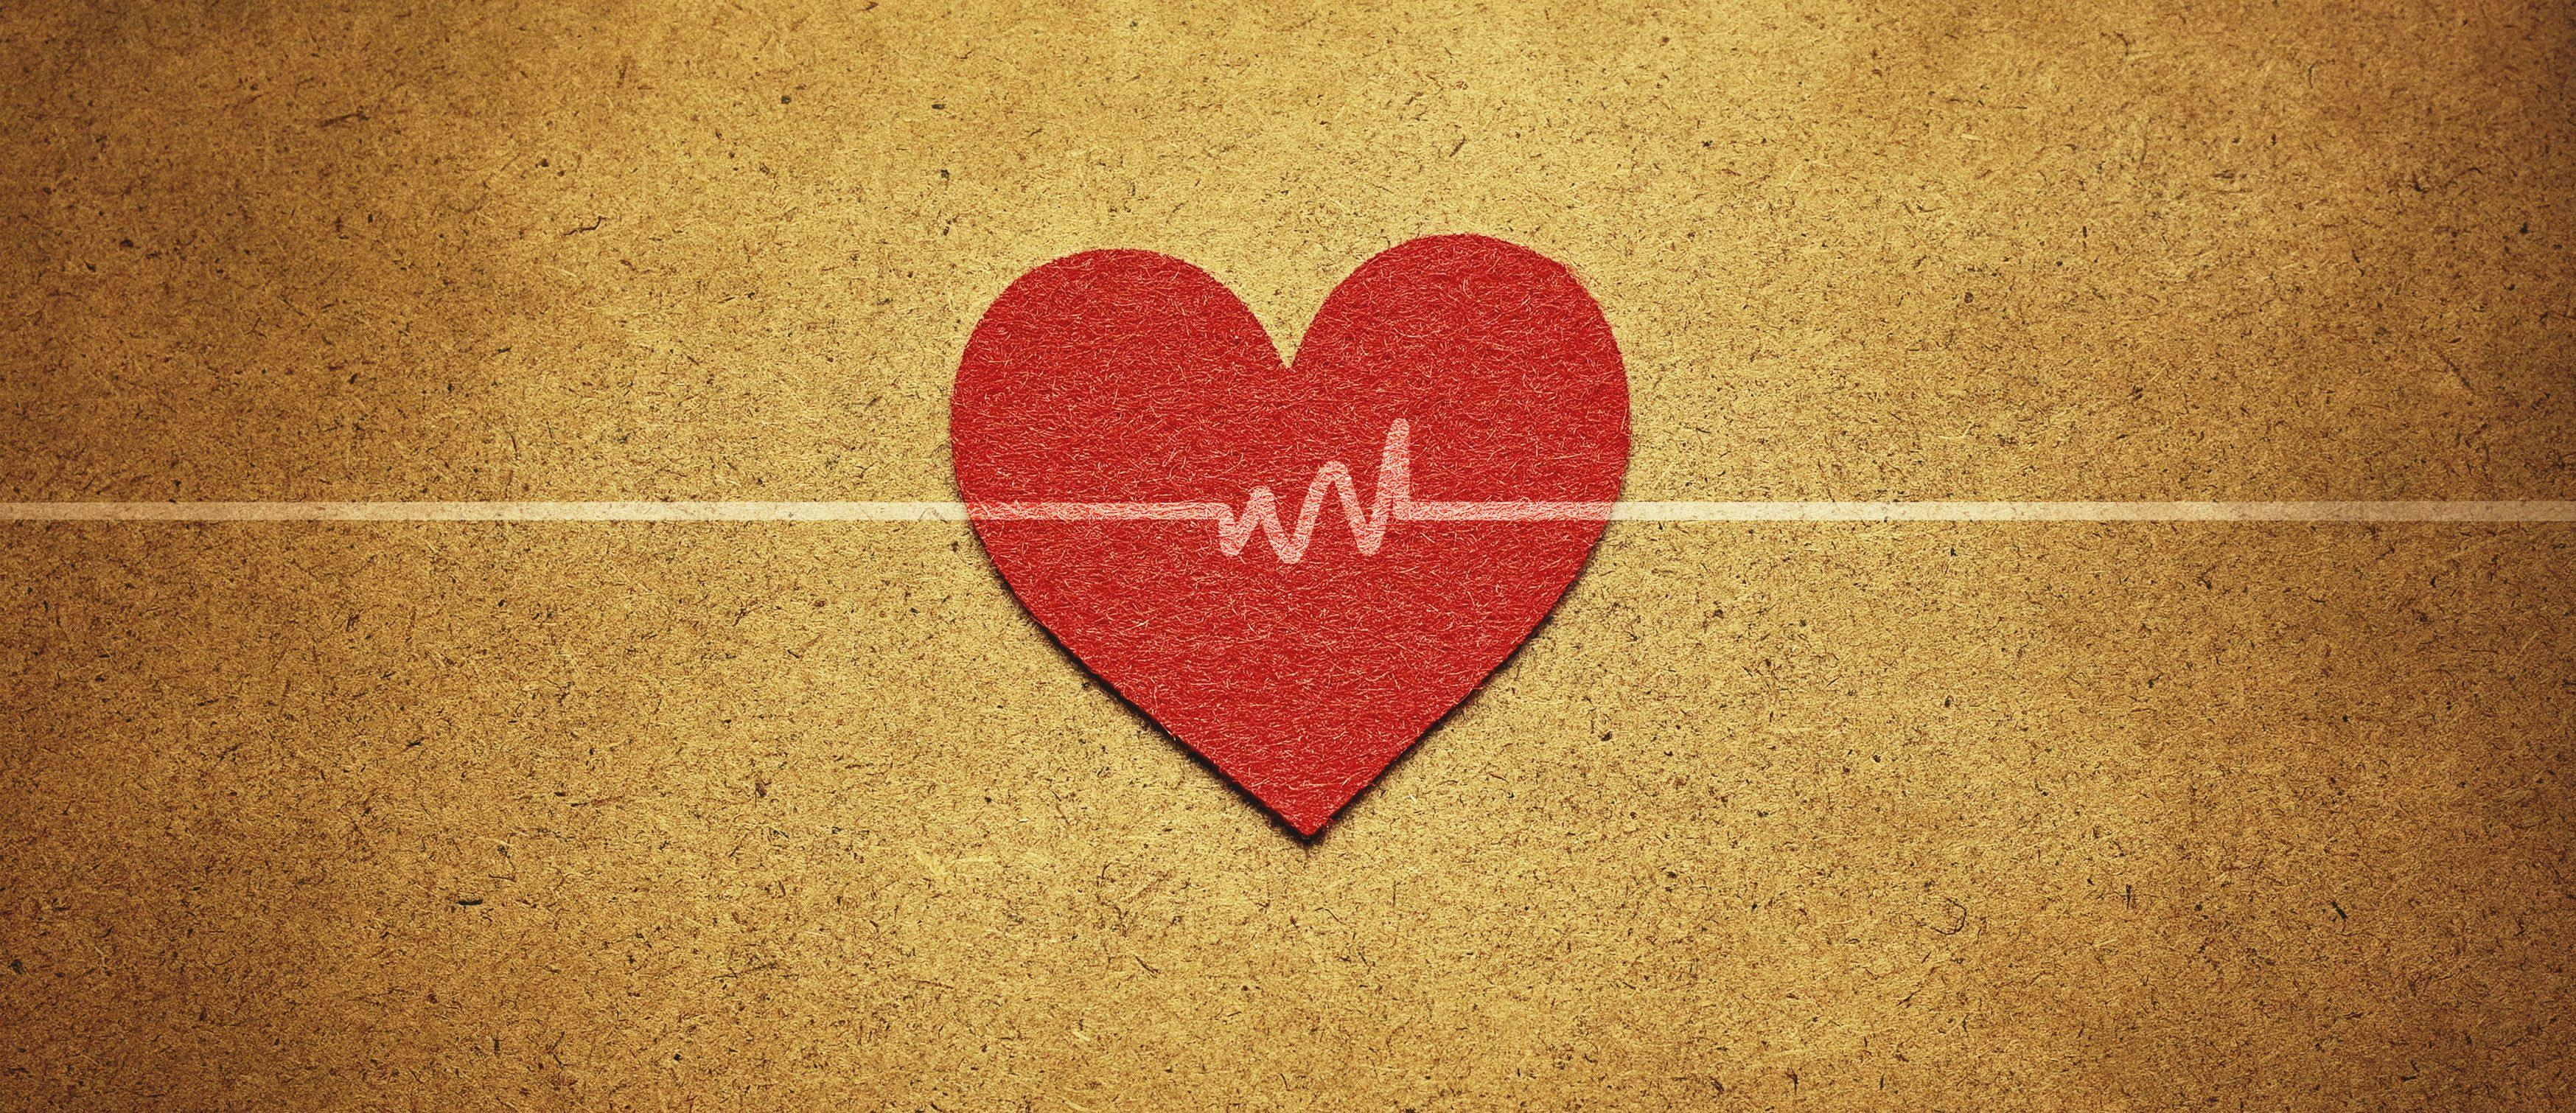 CVS: Heart Health Screenings at No Cost in February